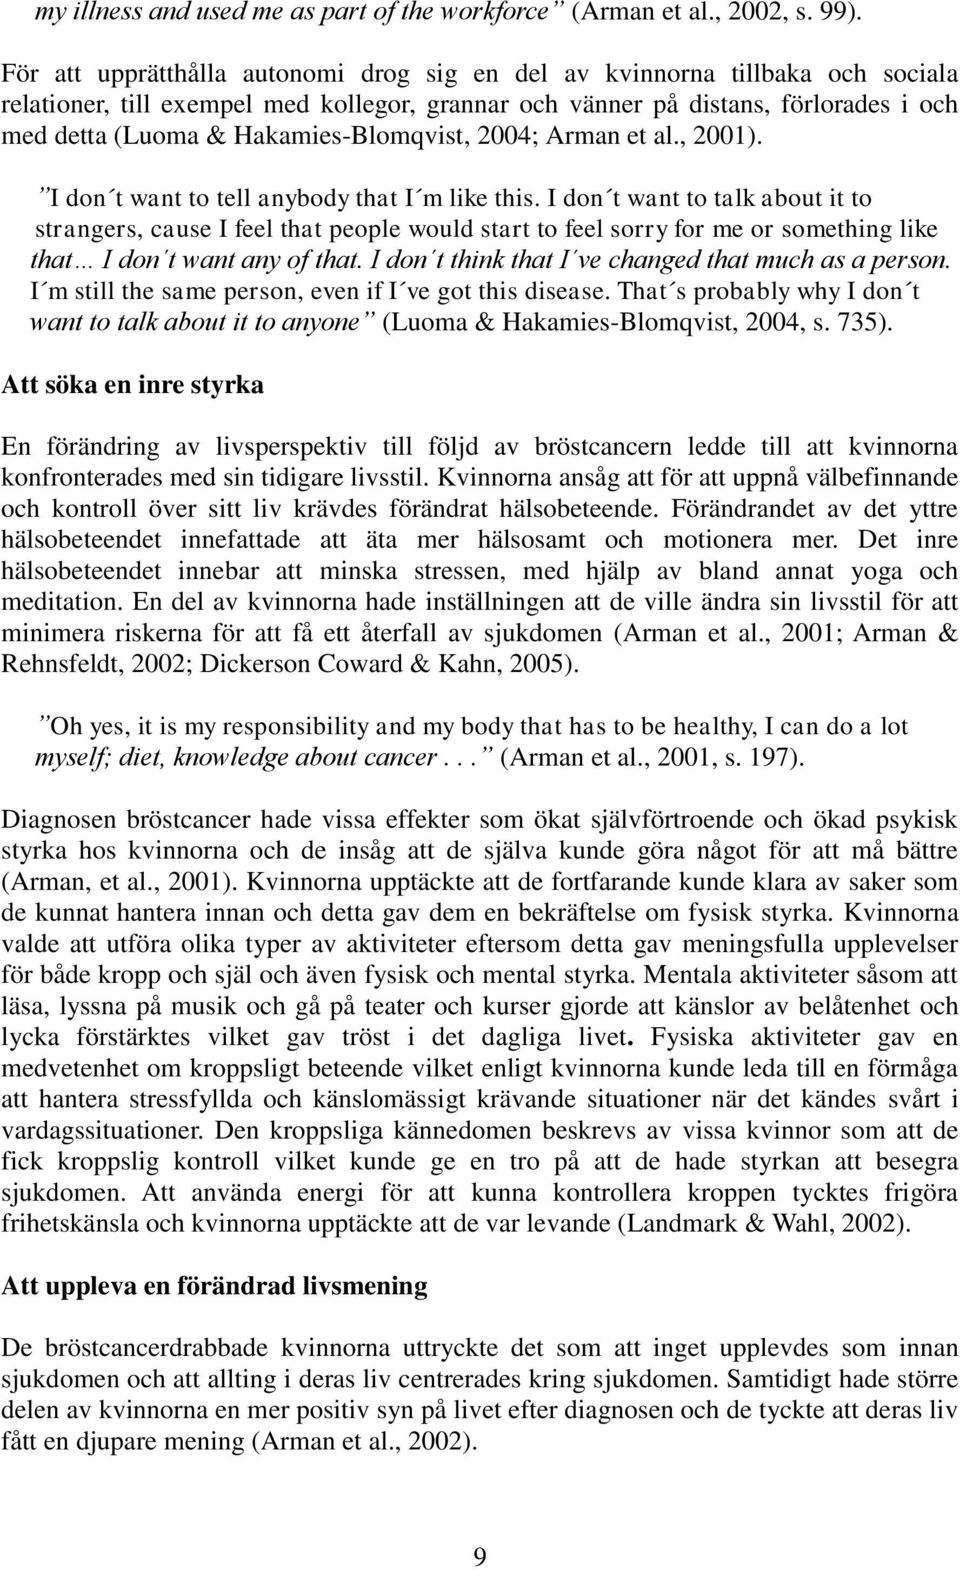 Hakamies-Blomqvist, 2004; Arman et al., 2001). I don t want to tell anybody that I m like this.